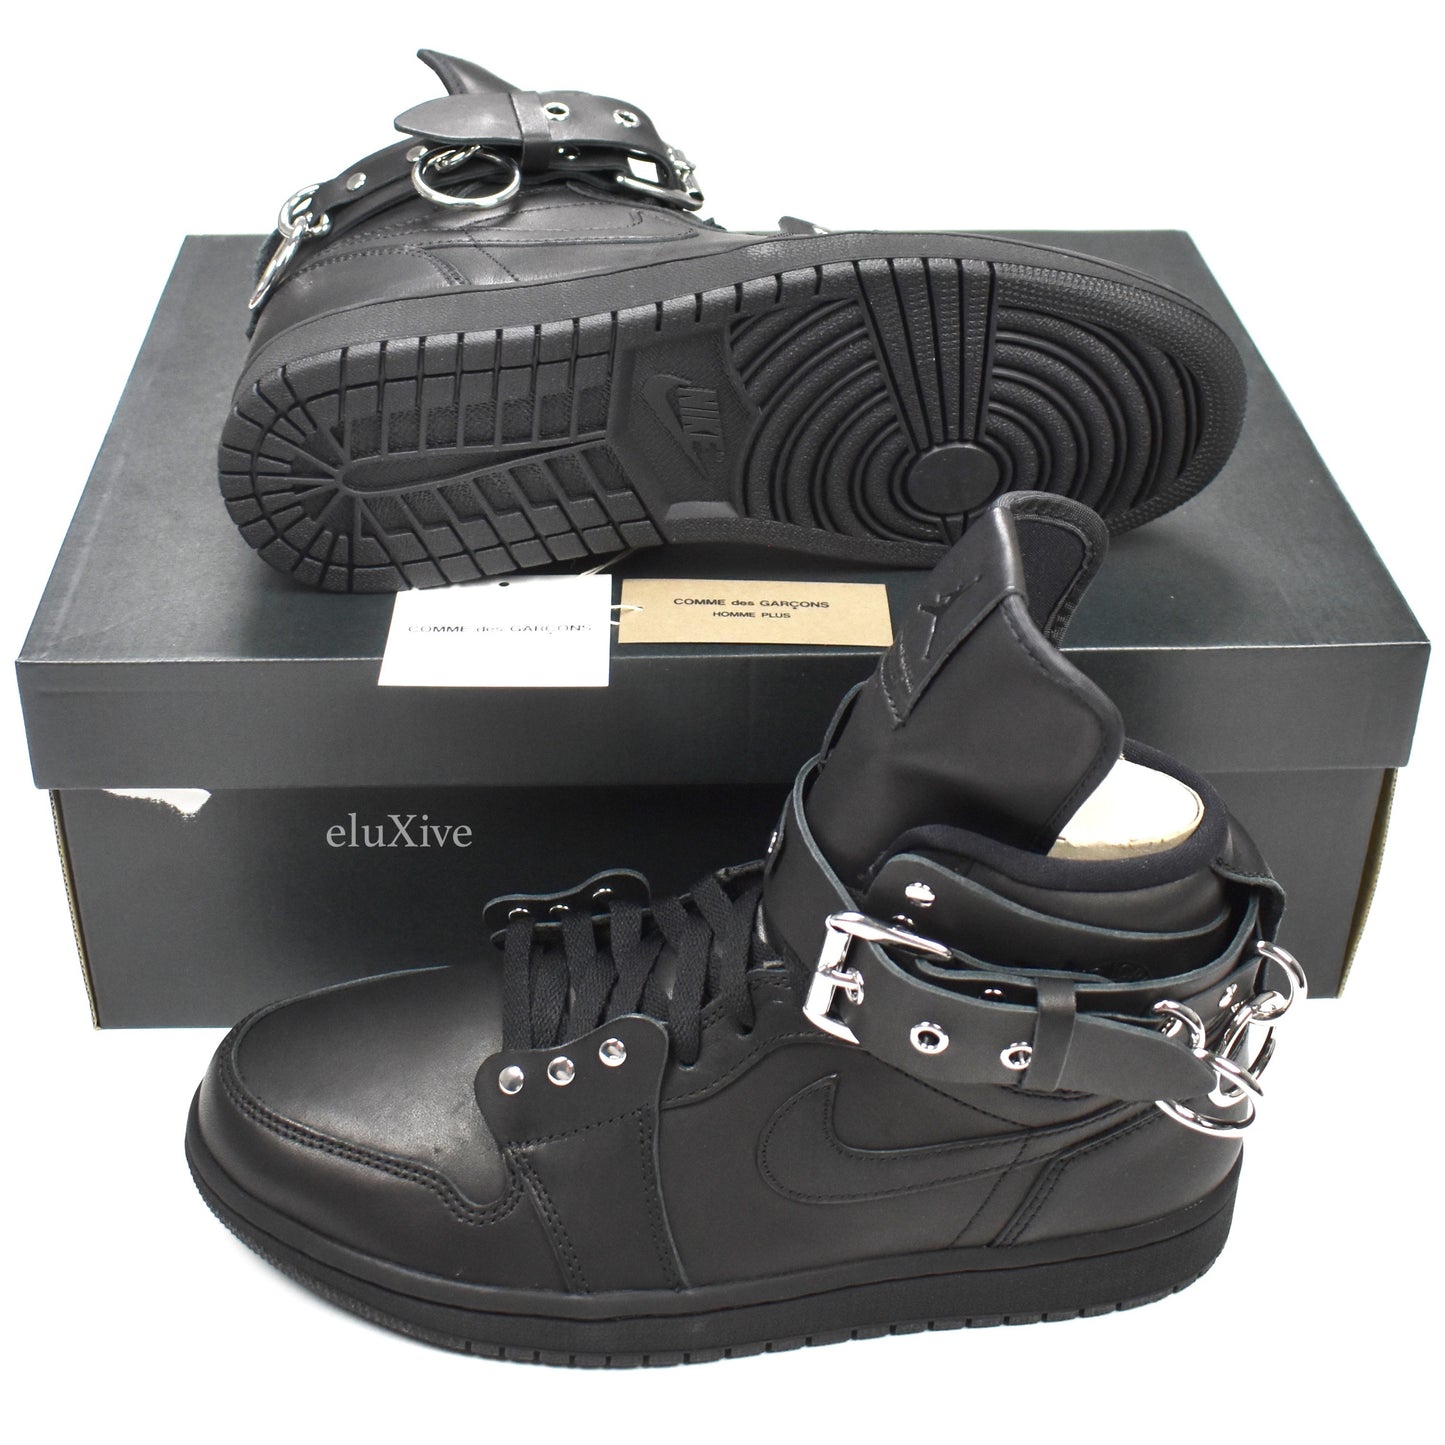 Comme des Garcons x Nike - Air Jordan 1 Hi Strap SP-C CDG (Black)